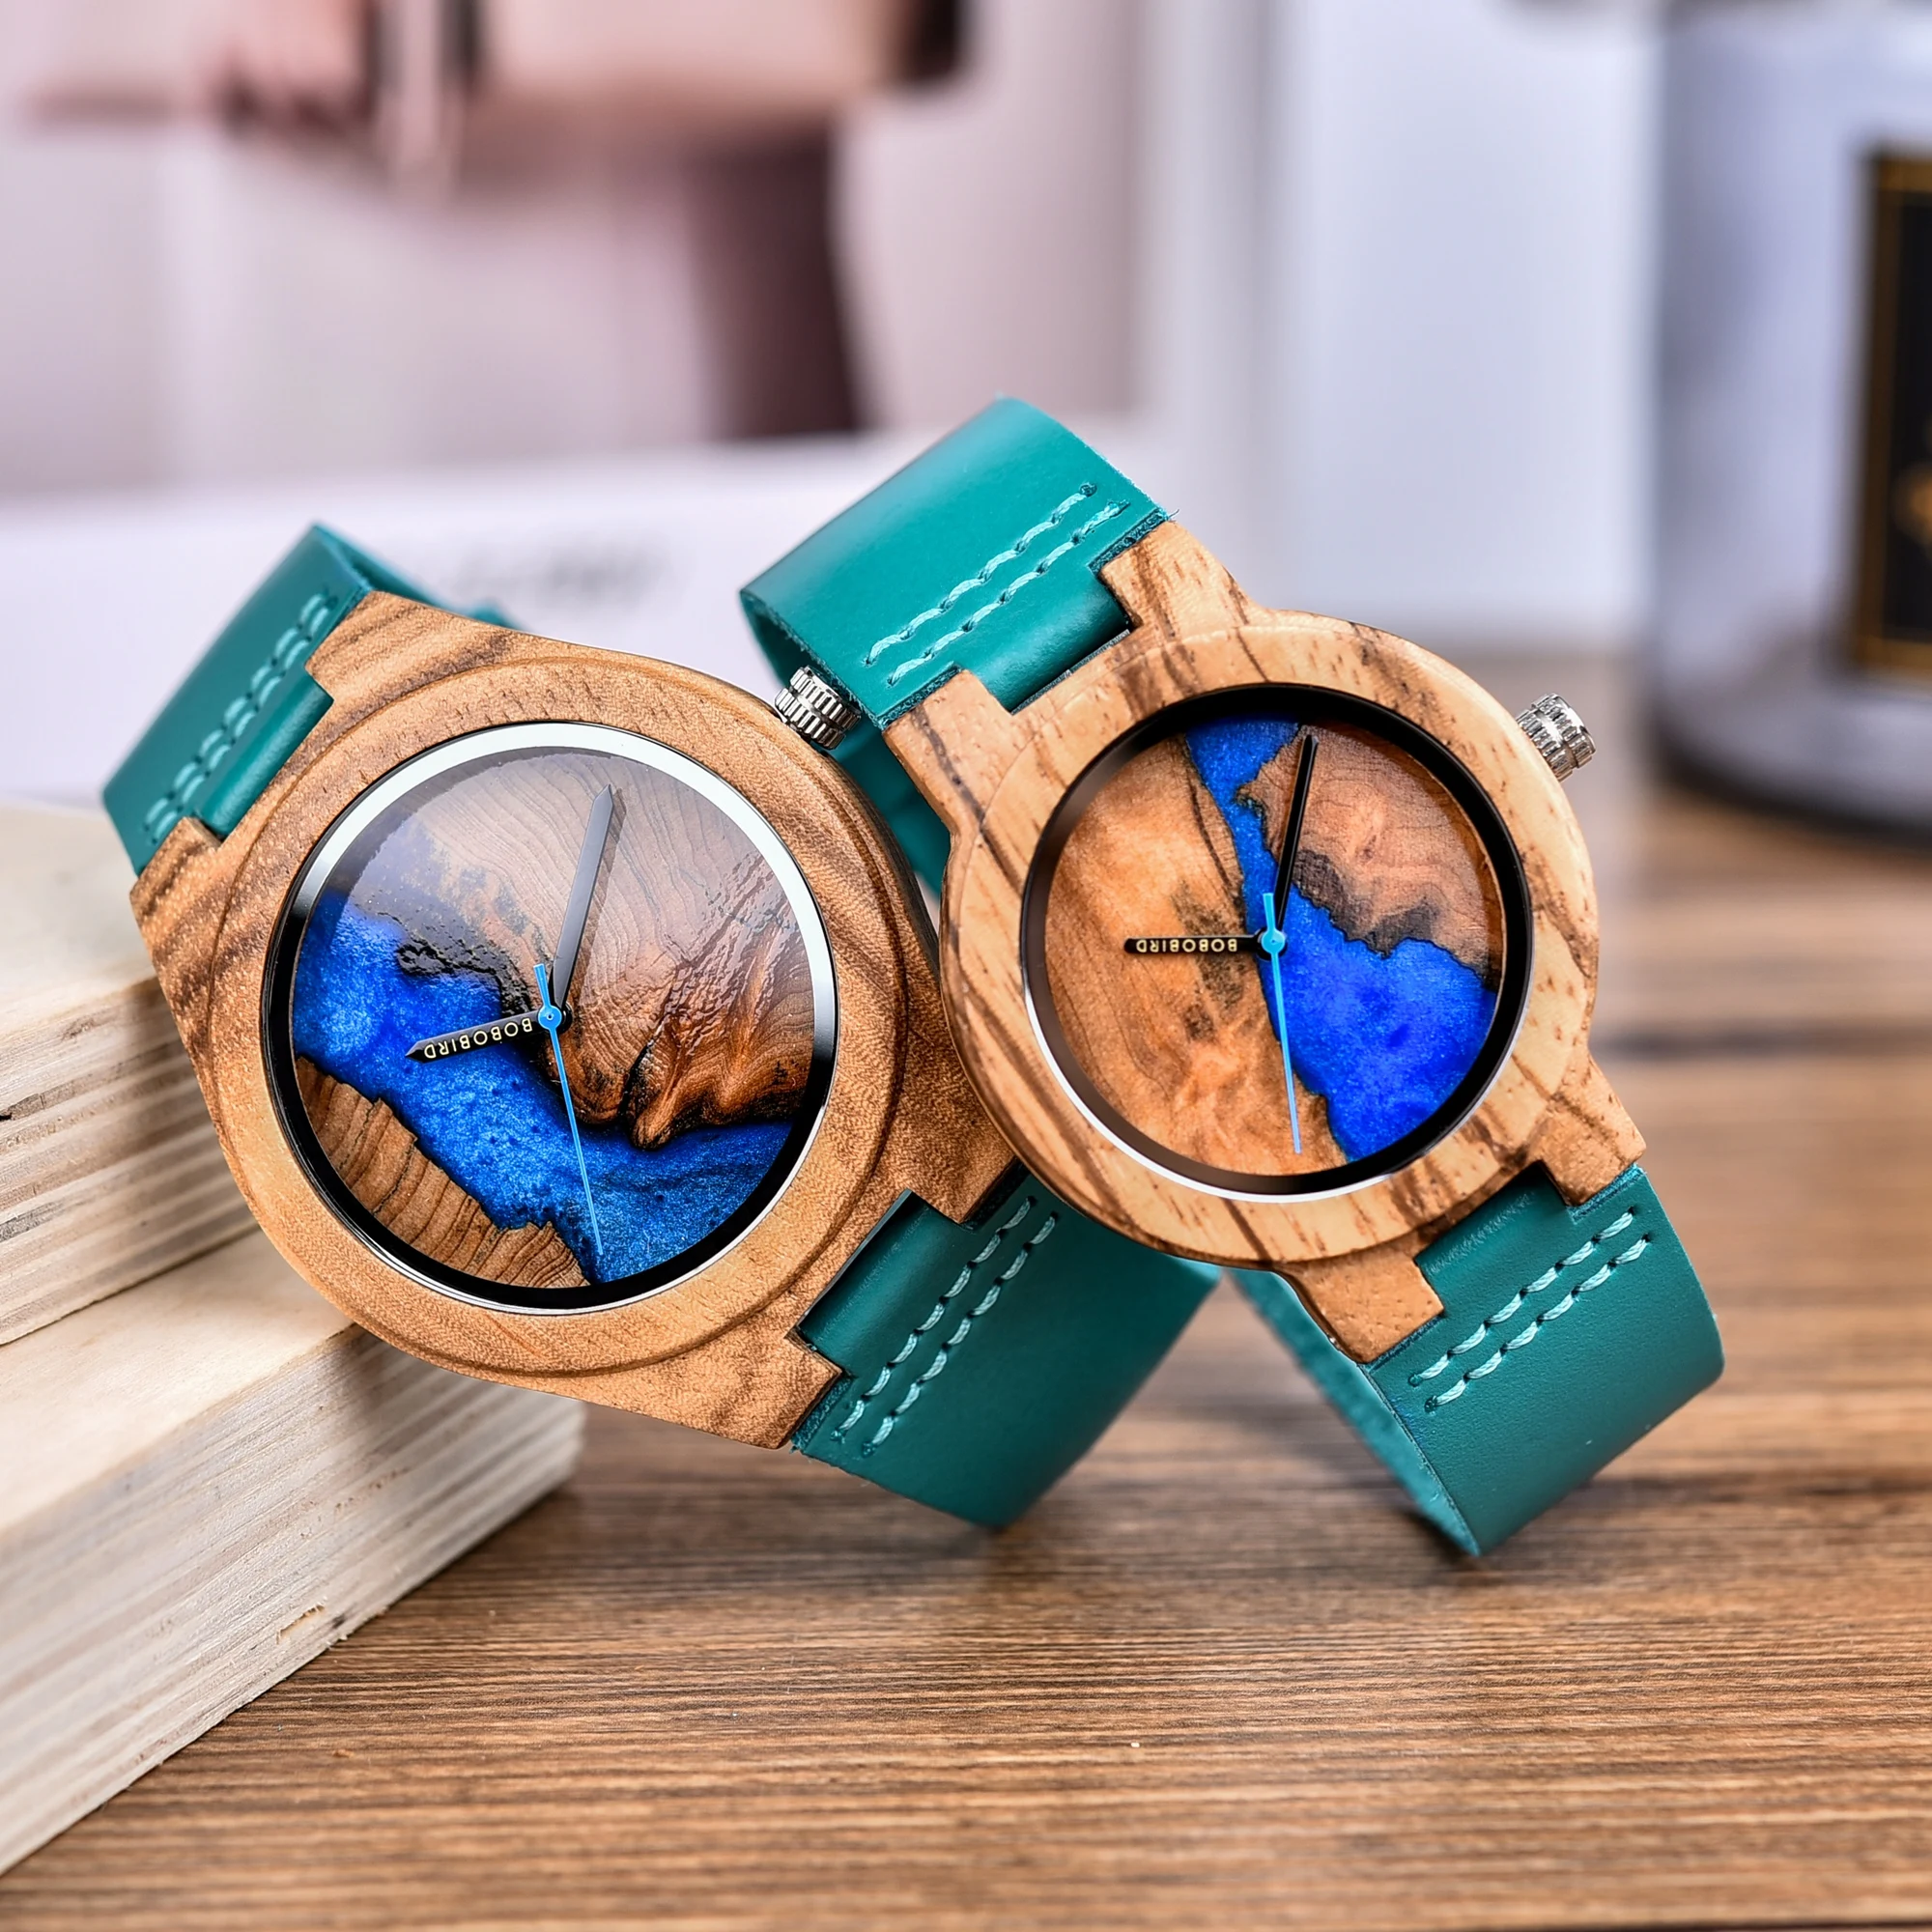 

Unique Wooden Couple Watches New Design Men Watch BOBO BIRD Top Fashion Women Timepiece Japan Movement Great Gift reloj hombre